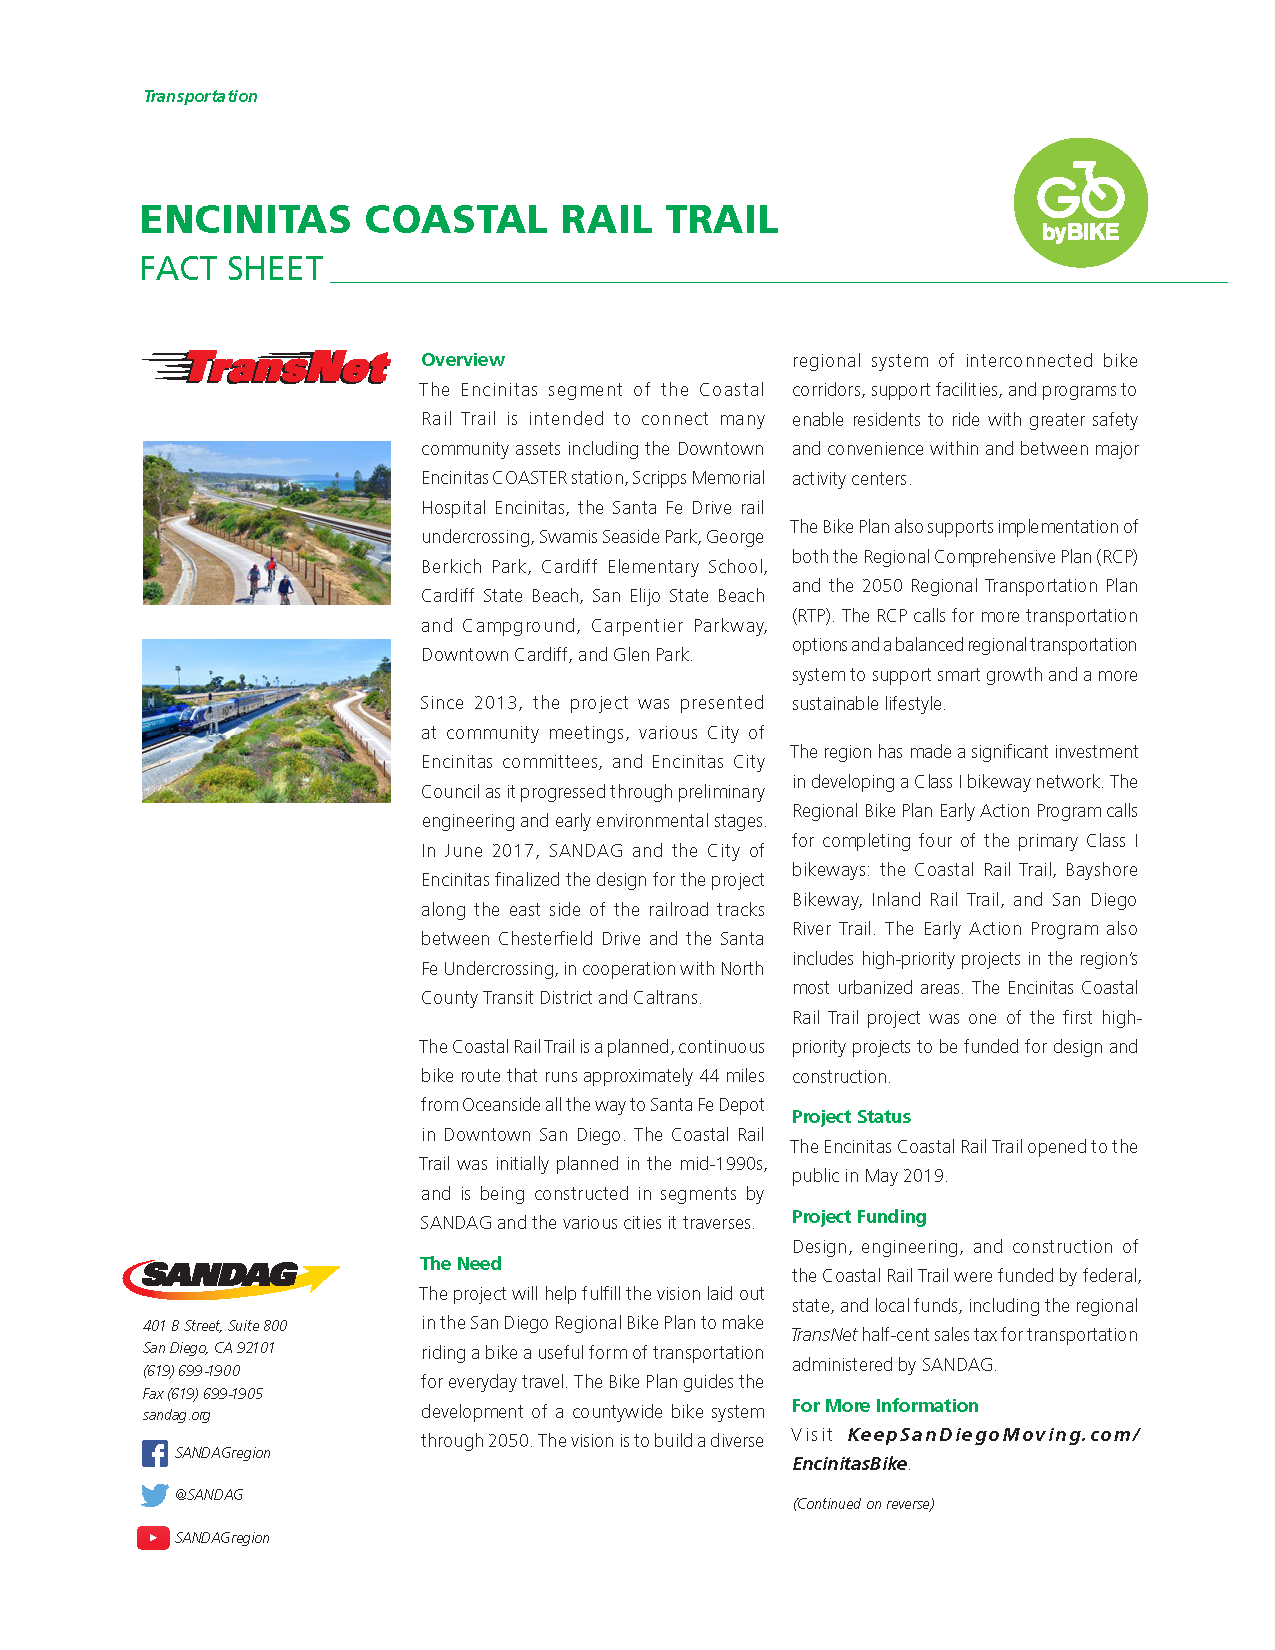 View the Encinitas Coastal Rail Trail Bikeway project fact sheet in English.